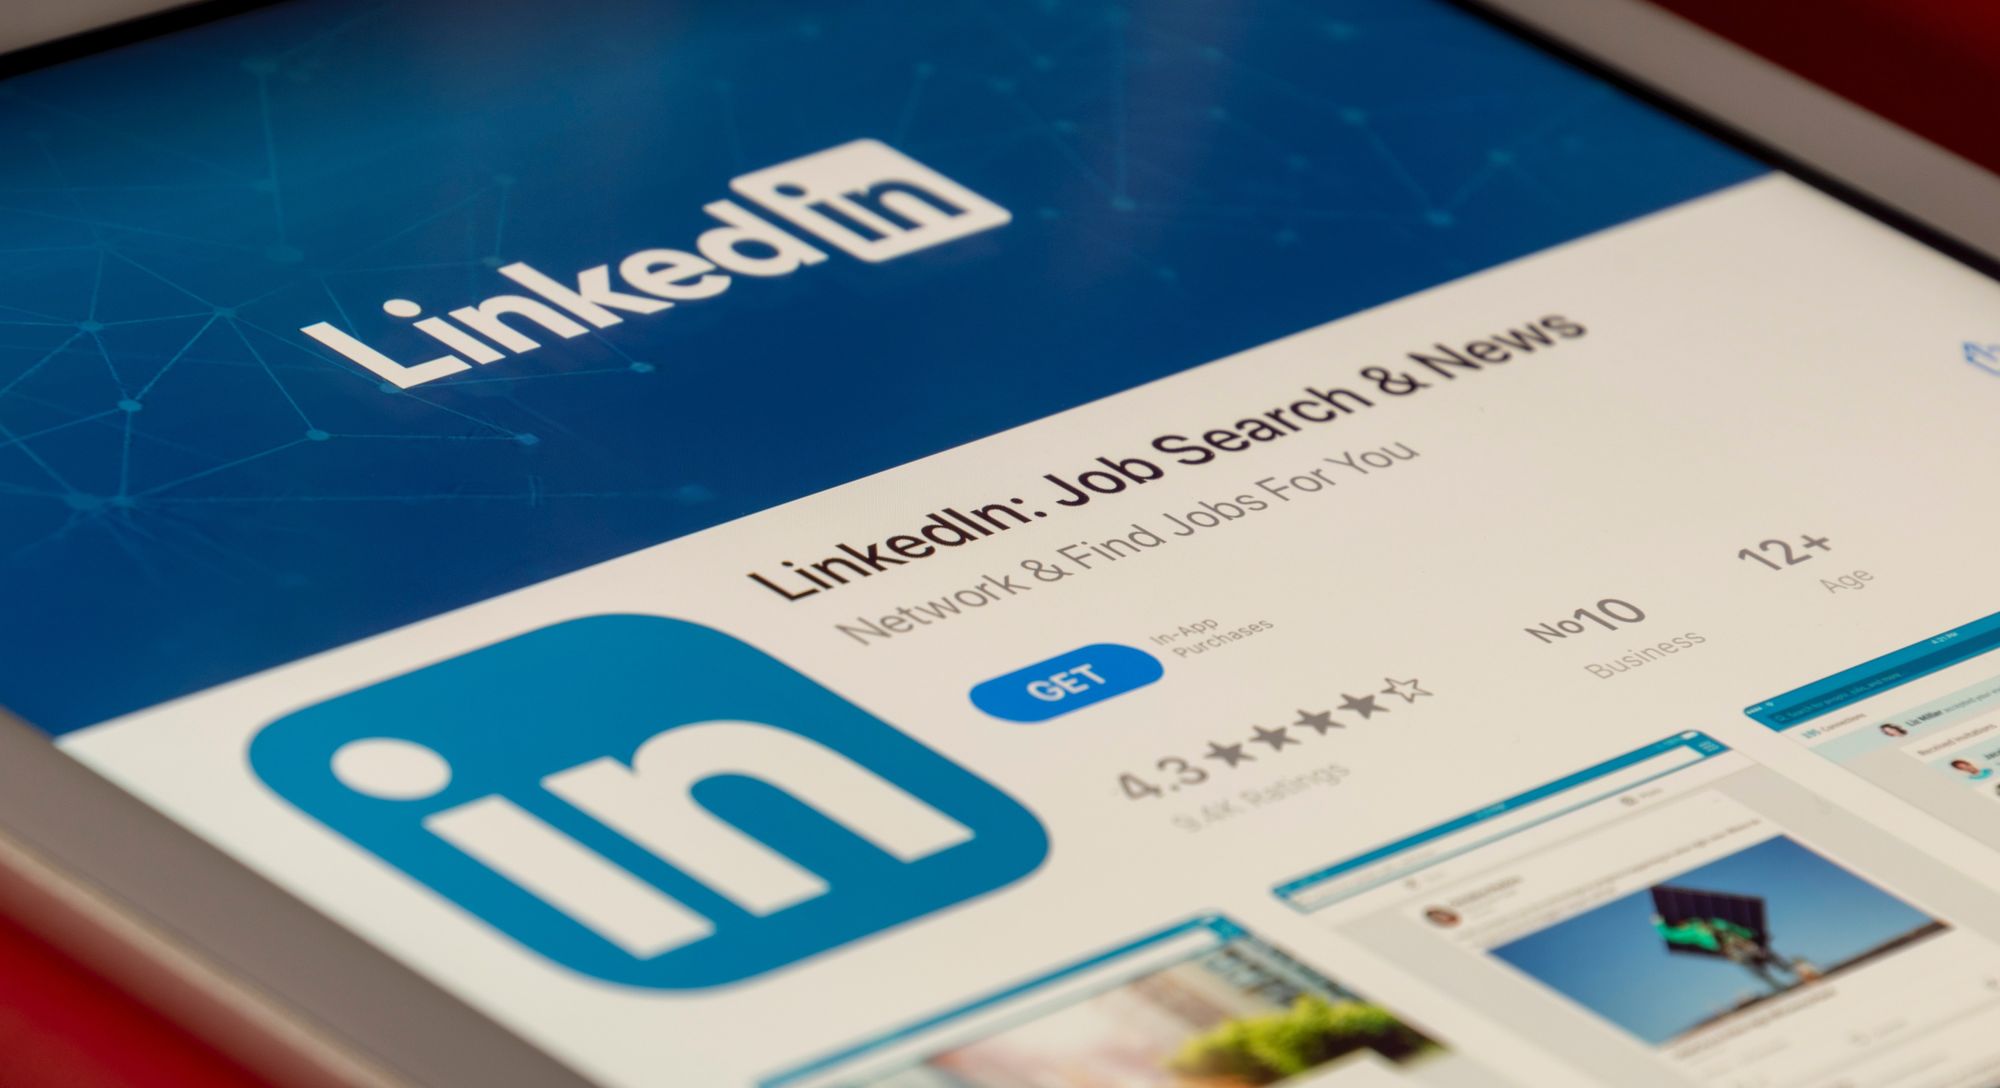 Set up a LinkedIn Download & Auto-Updating LinkedIn Archive